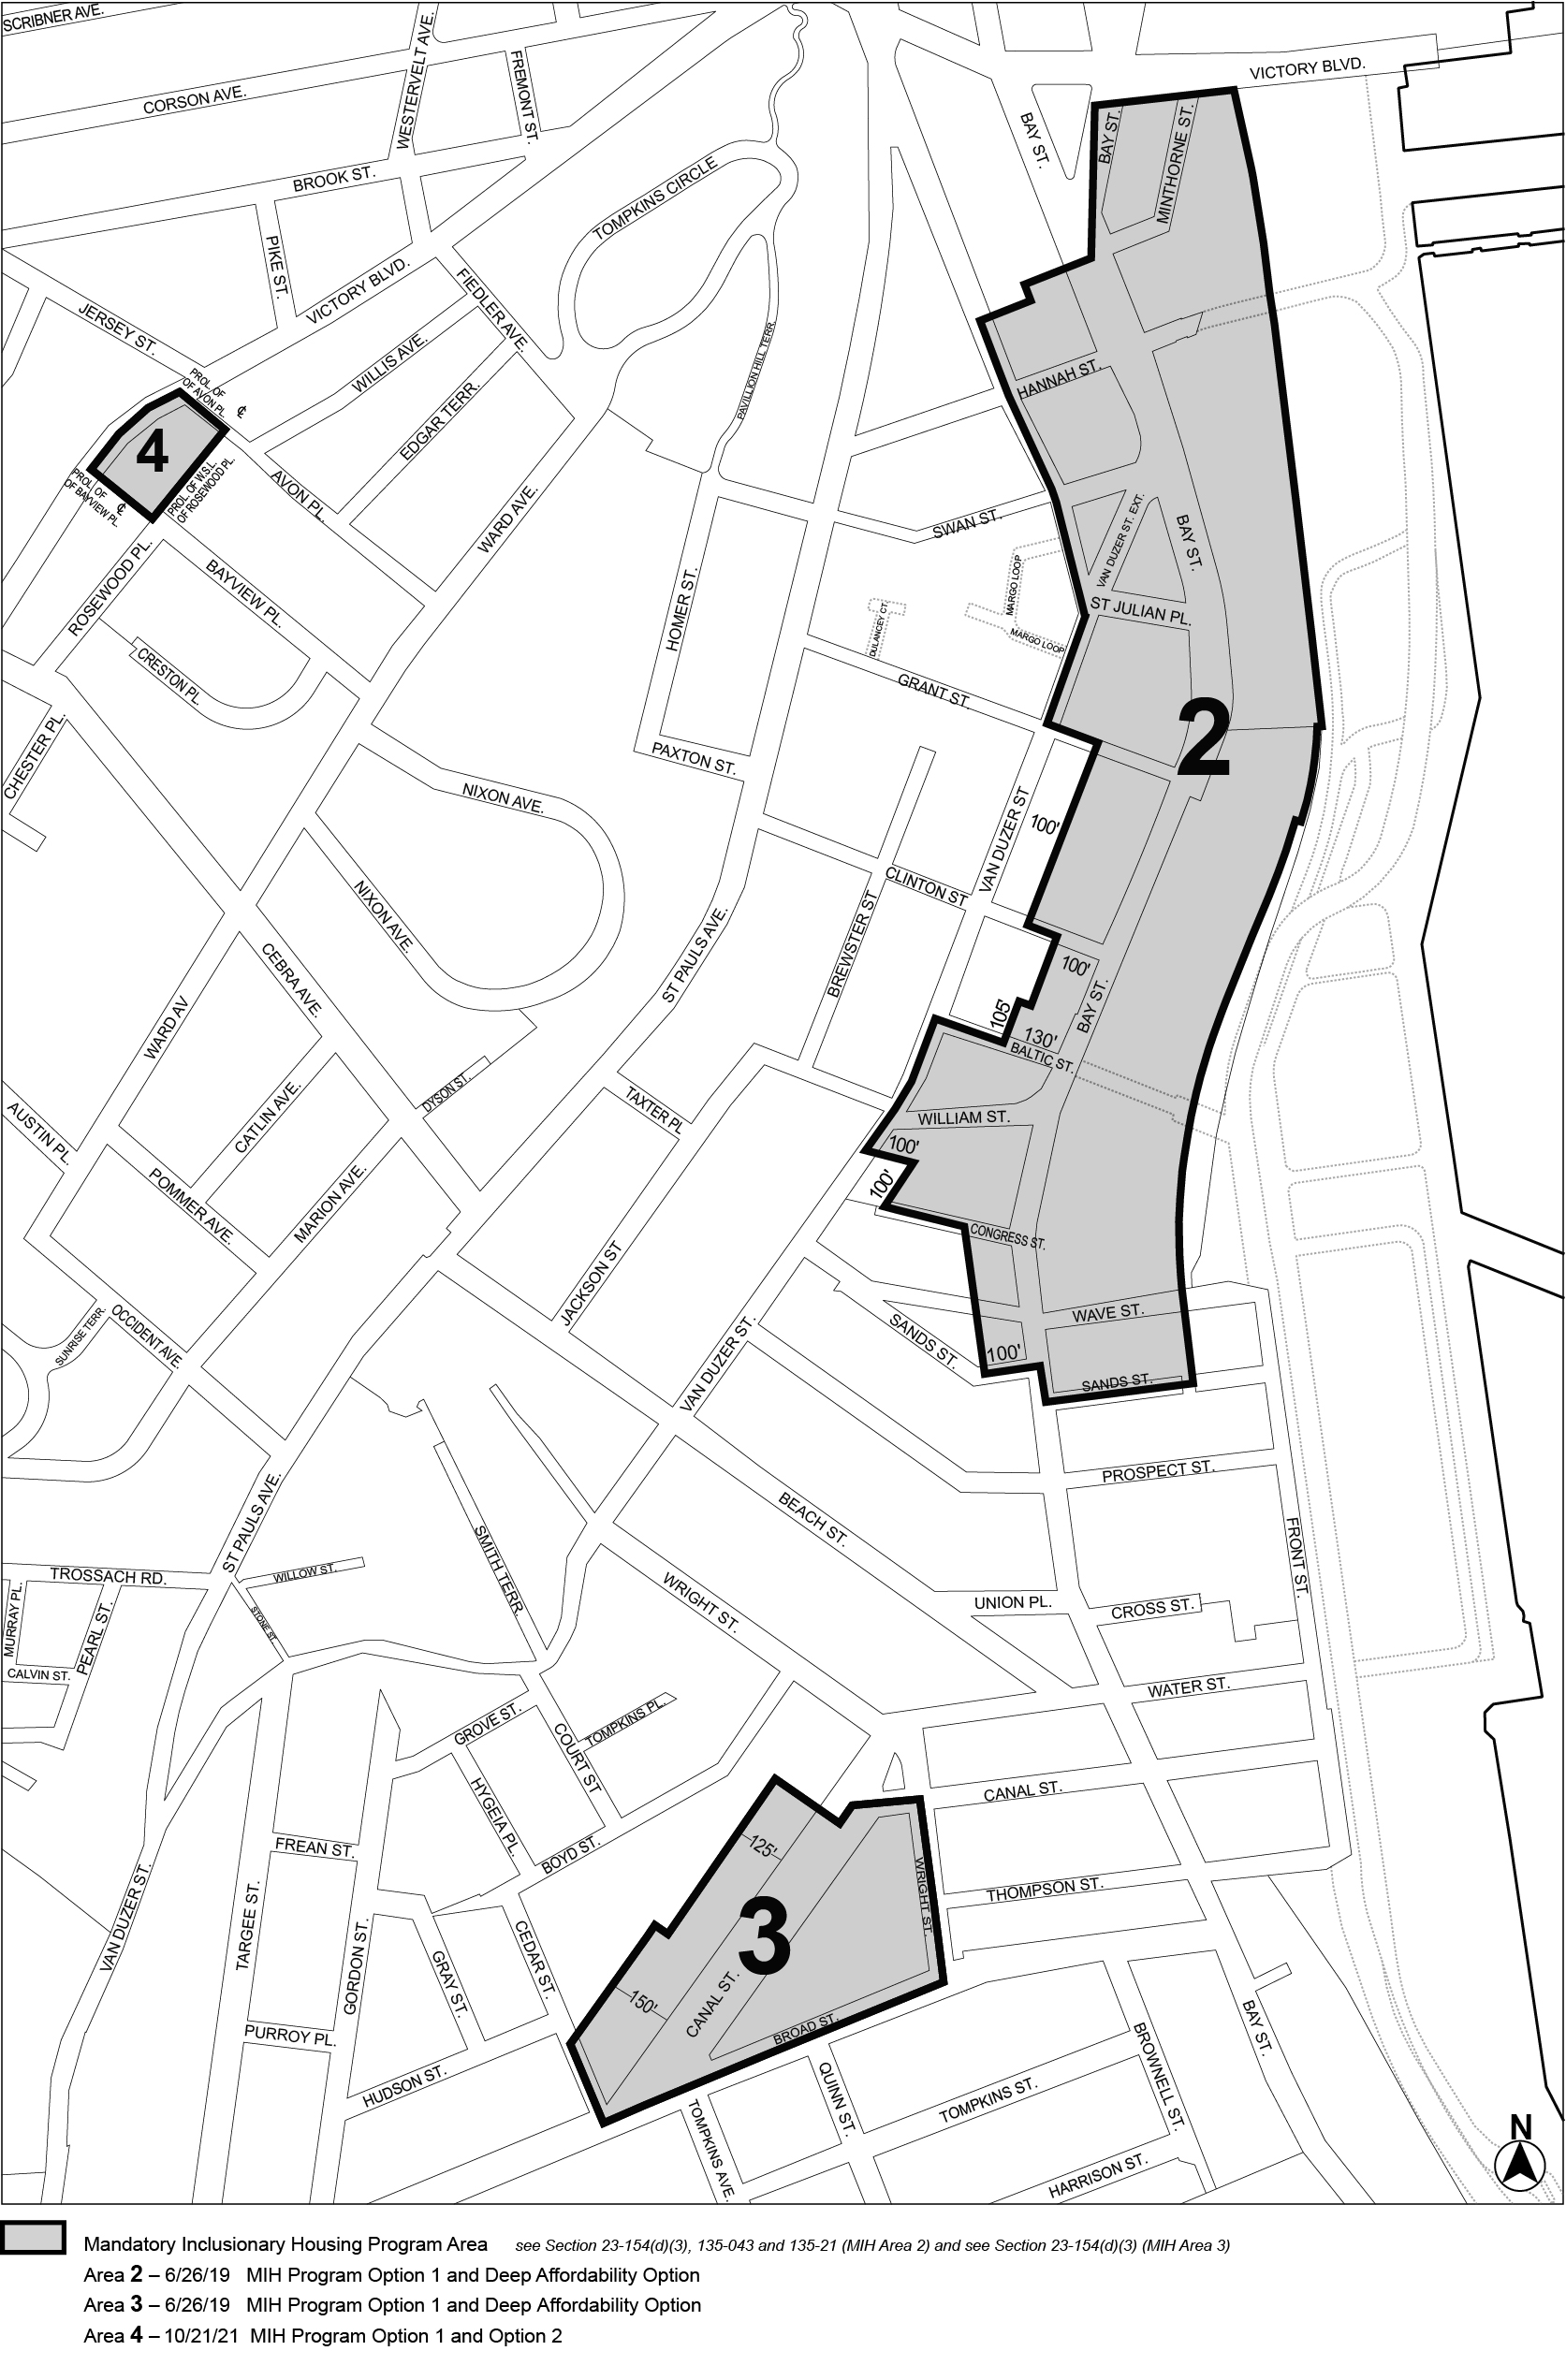 APPENDIX F, SI CD1, Map 2, MIH area 4 (Option 1, Option 2) per 252 Victory Boulevard (N 210362 ZRR) 10/21/21